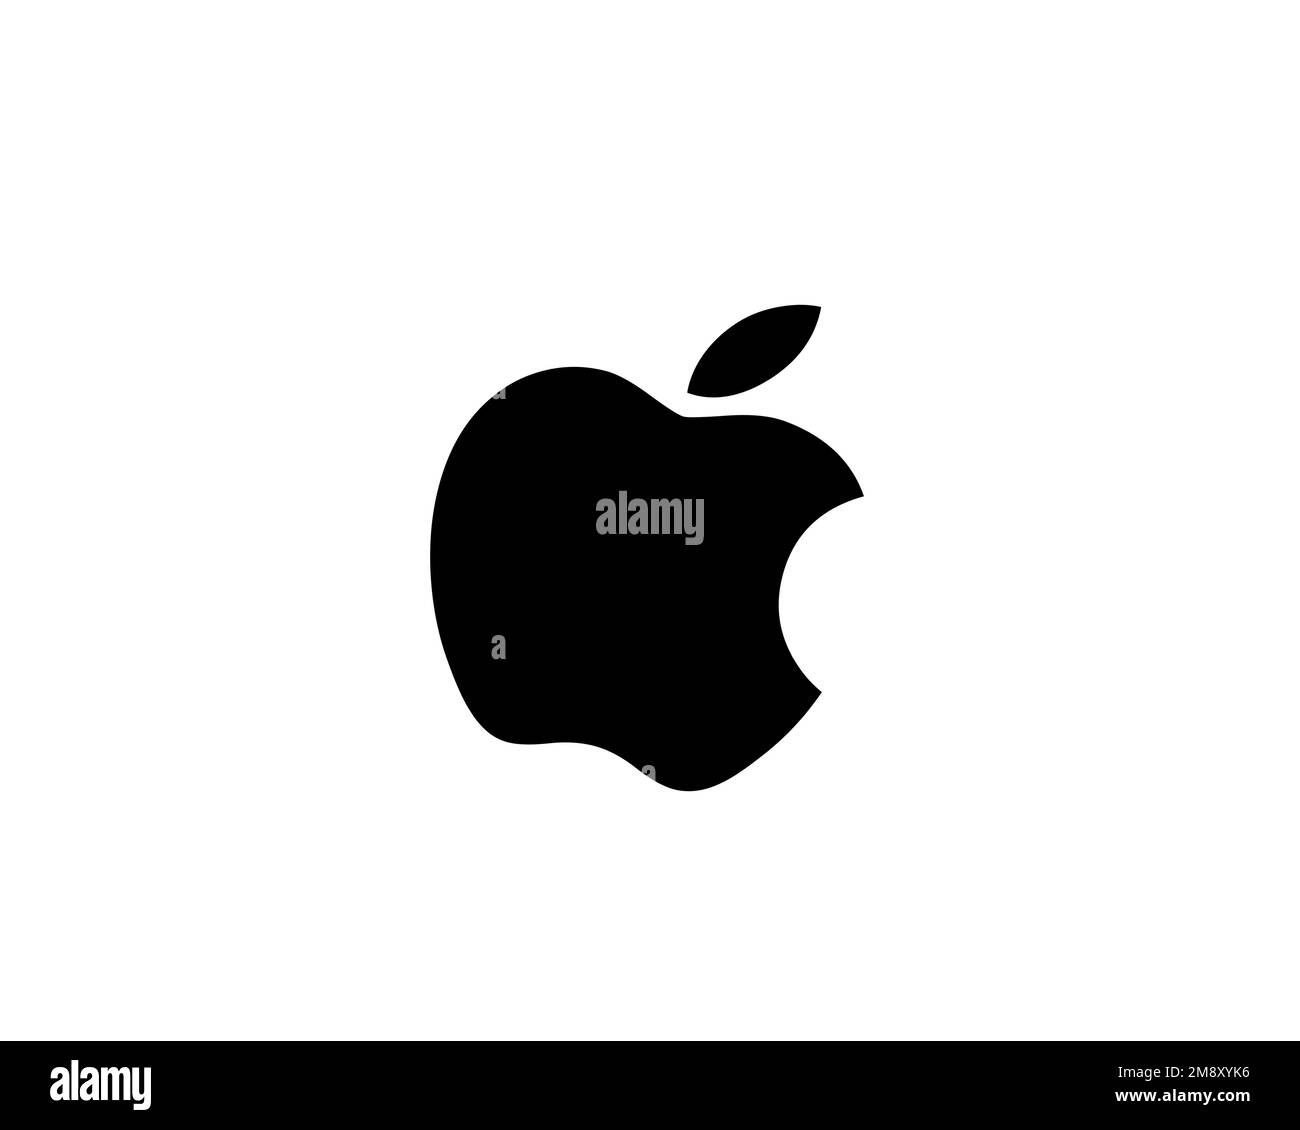 Apple Inc. rotated logo, white background B Stock Photo